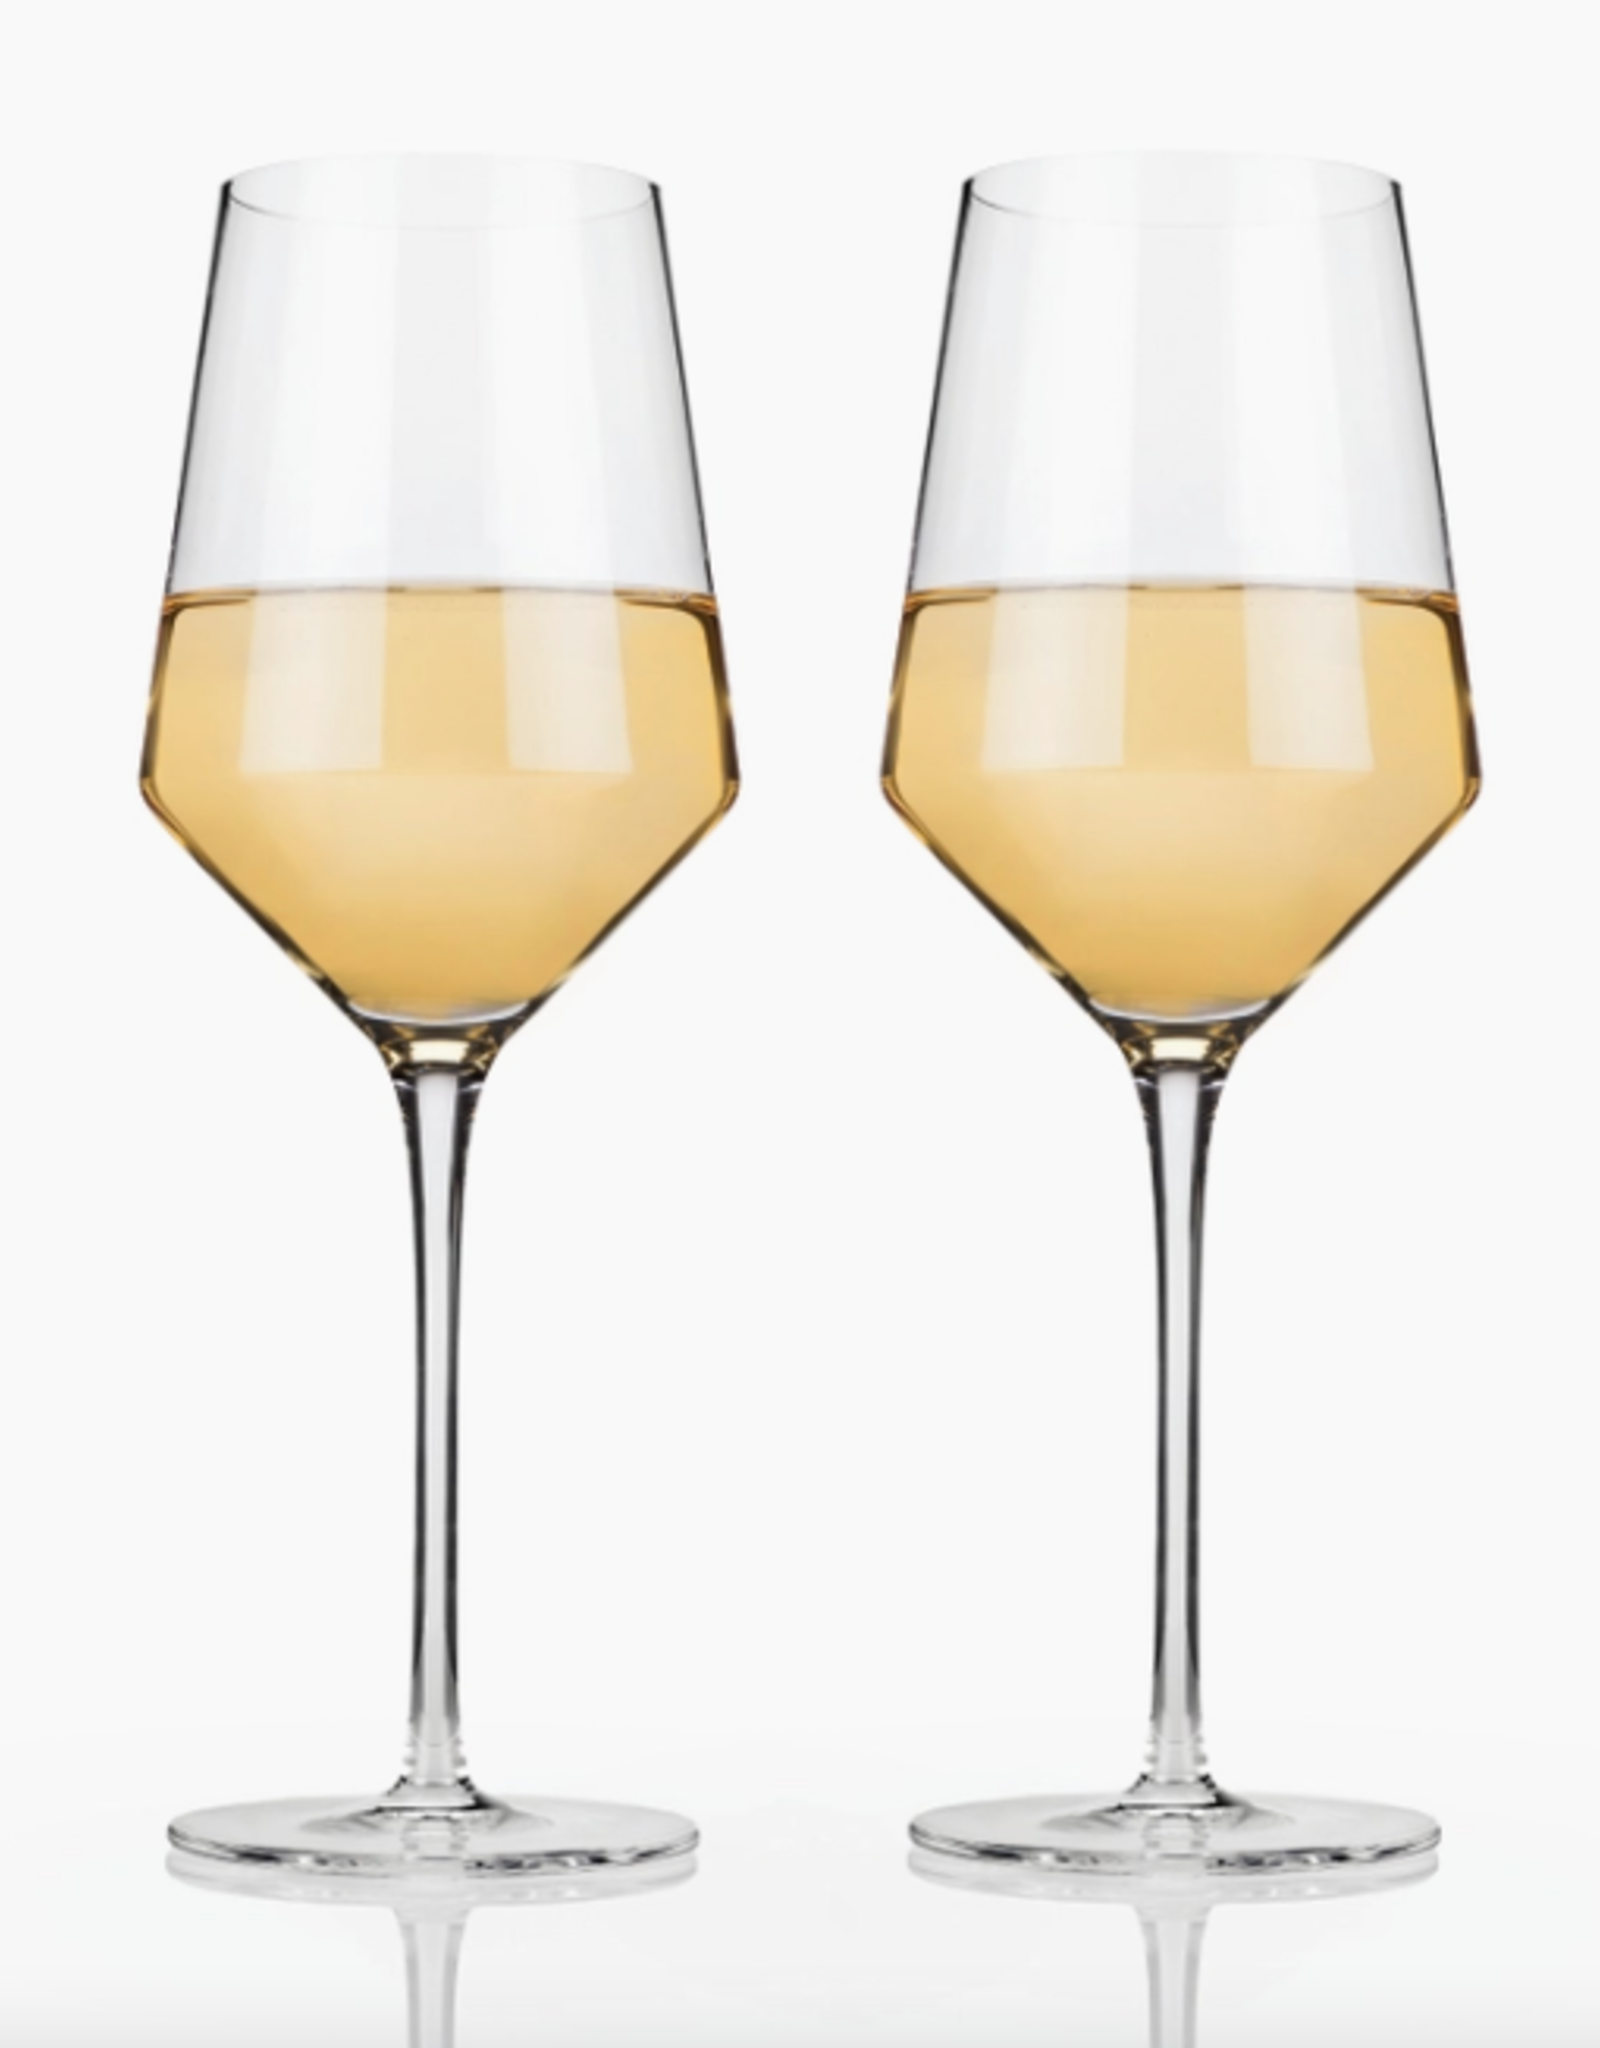 Viski Crystal Chardonnay Glasses